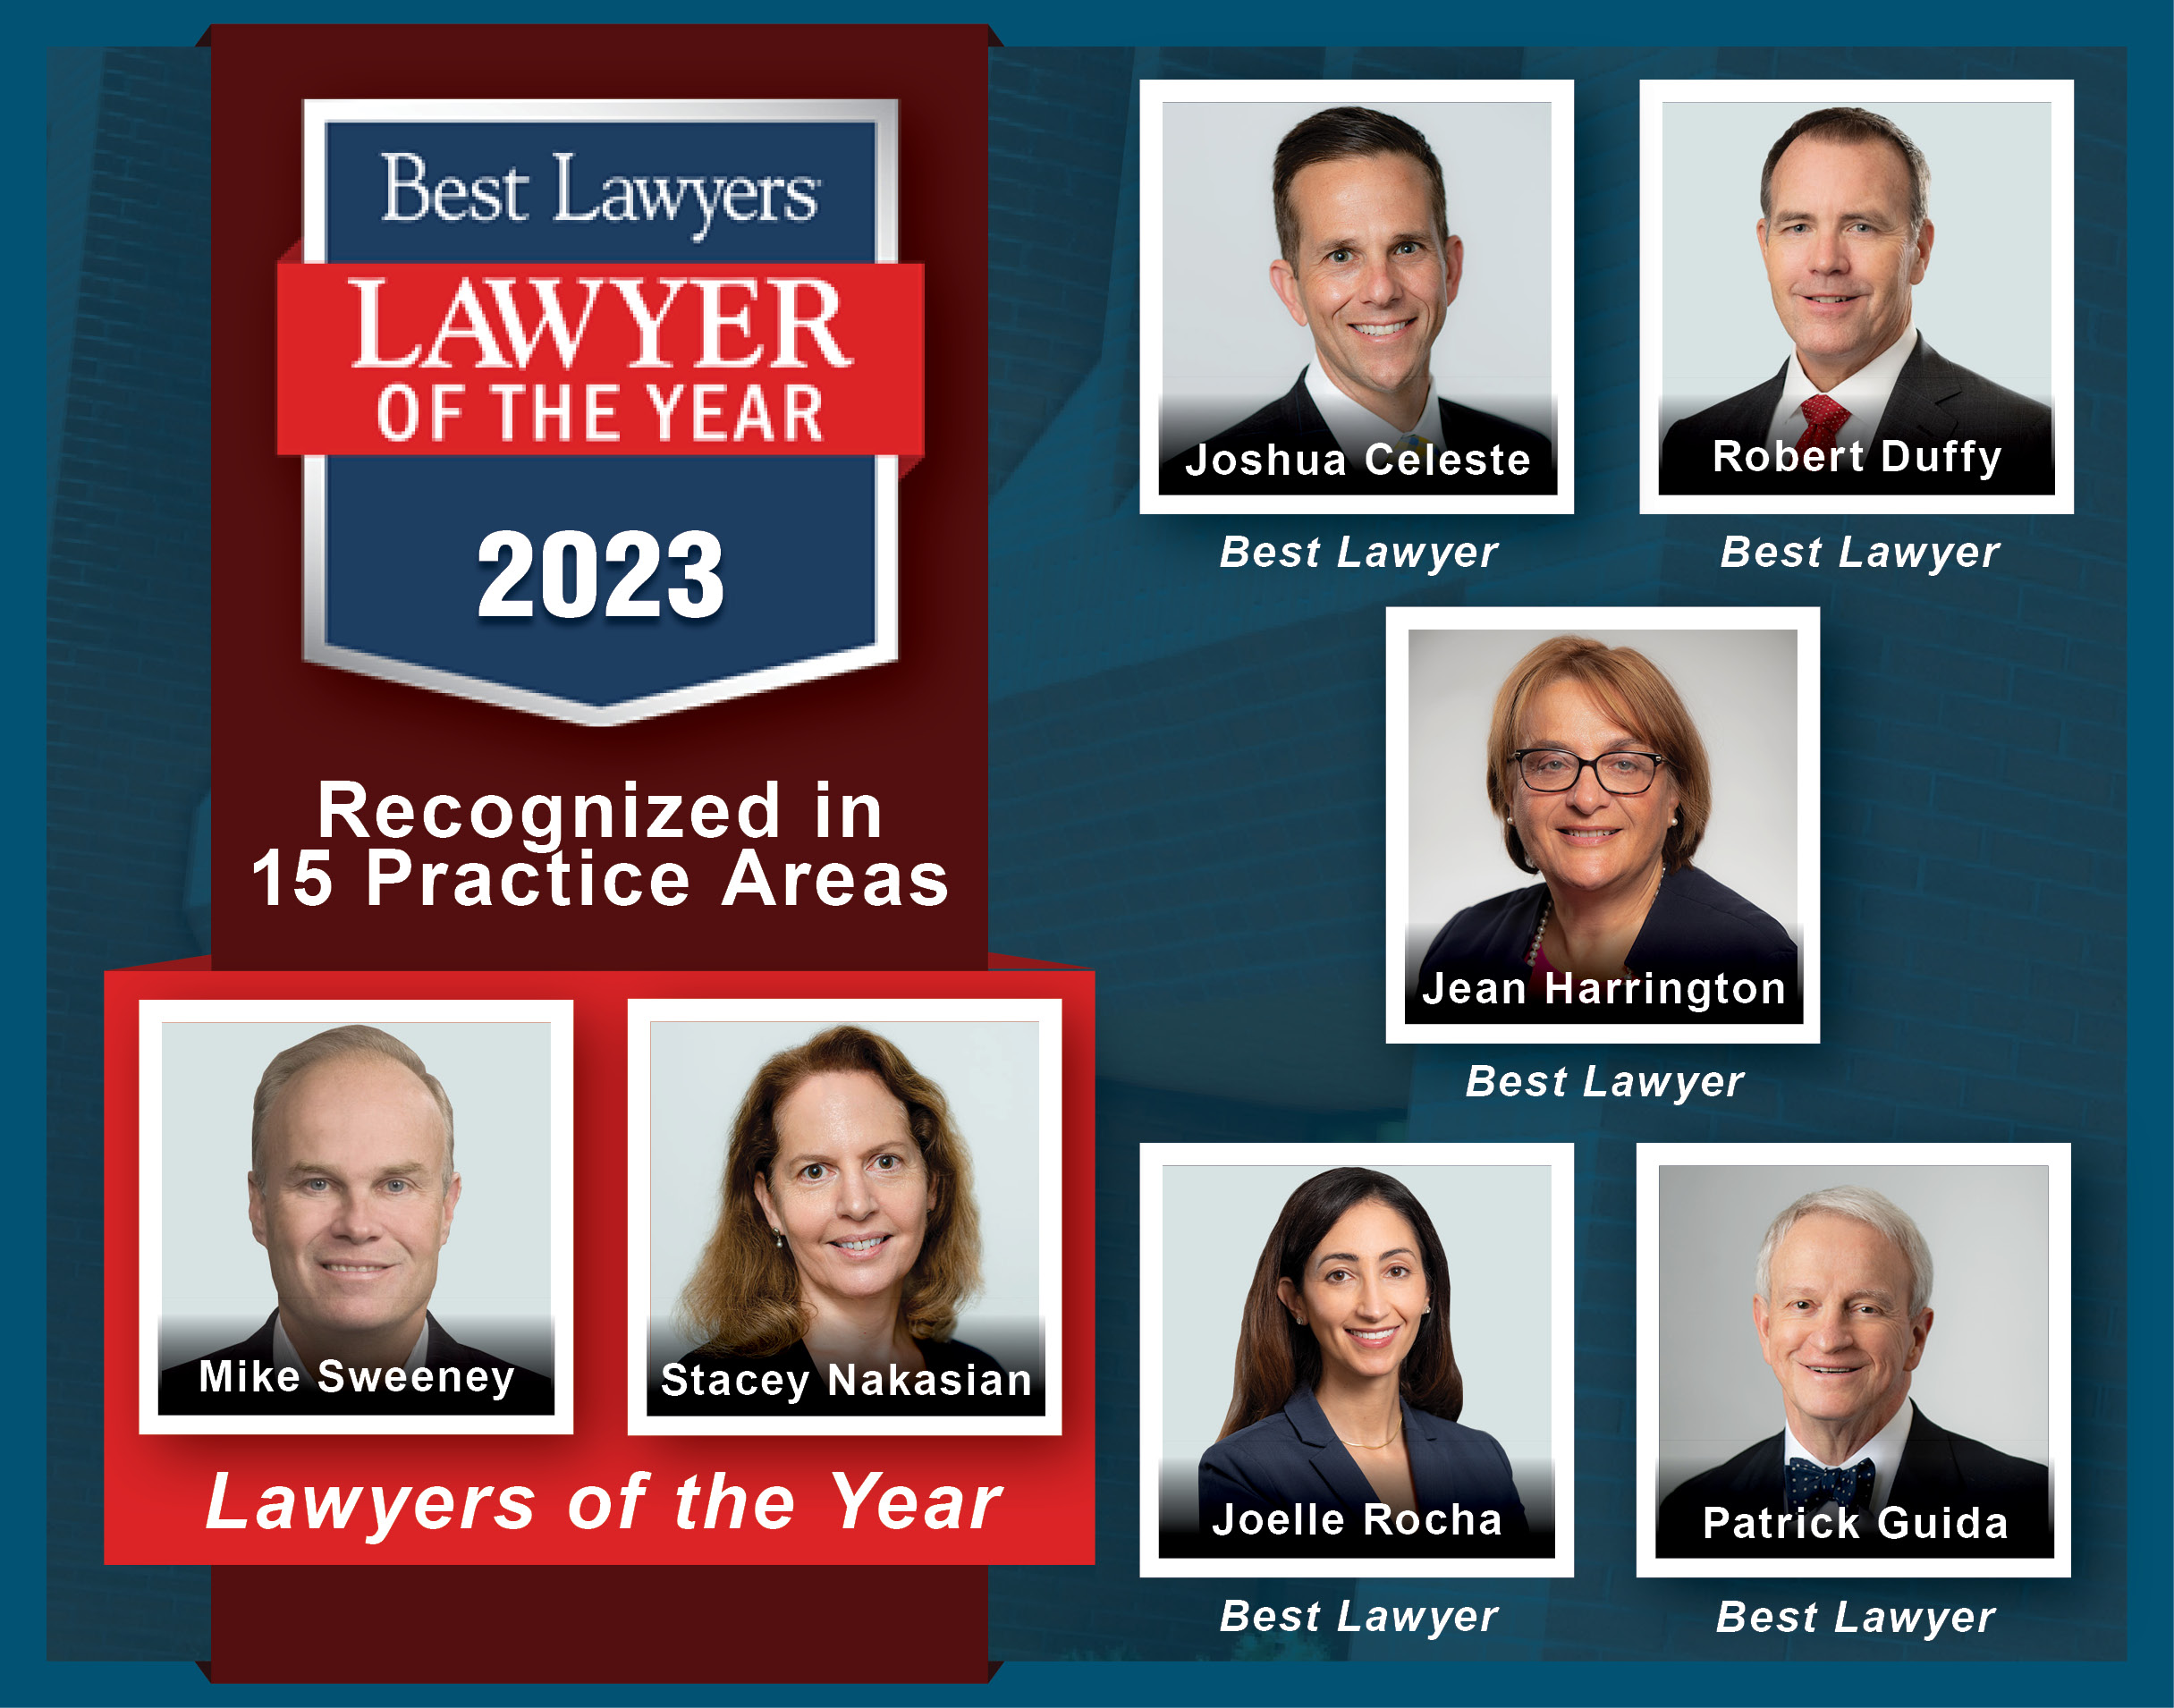 Image DS Best Lawyer 2023 Final 